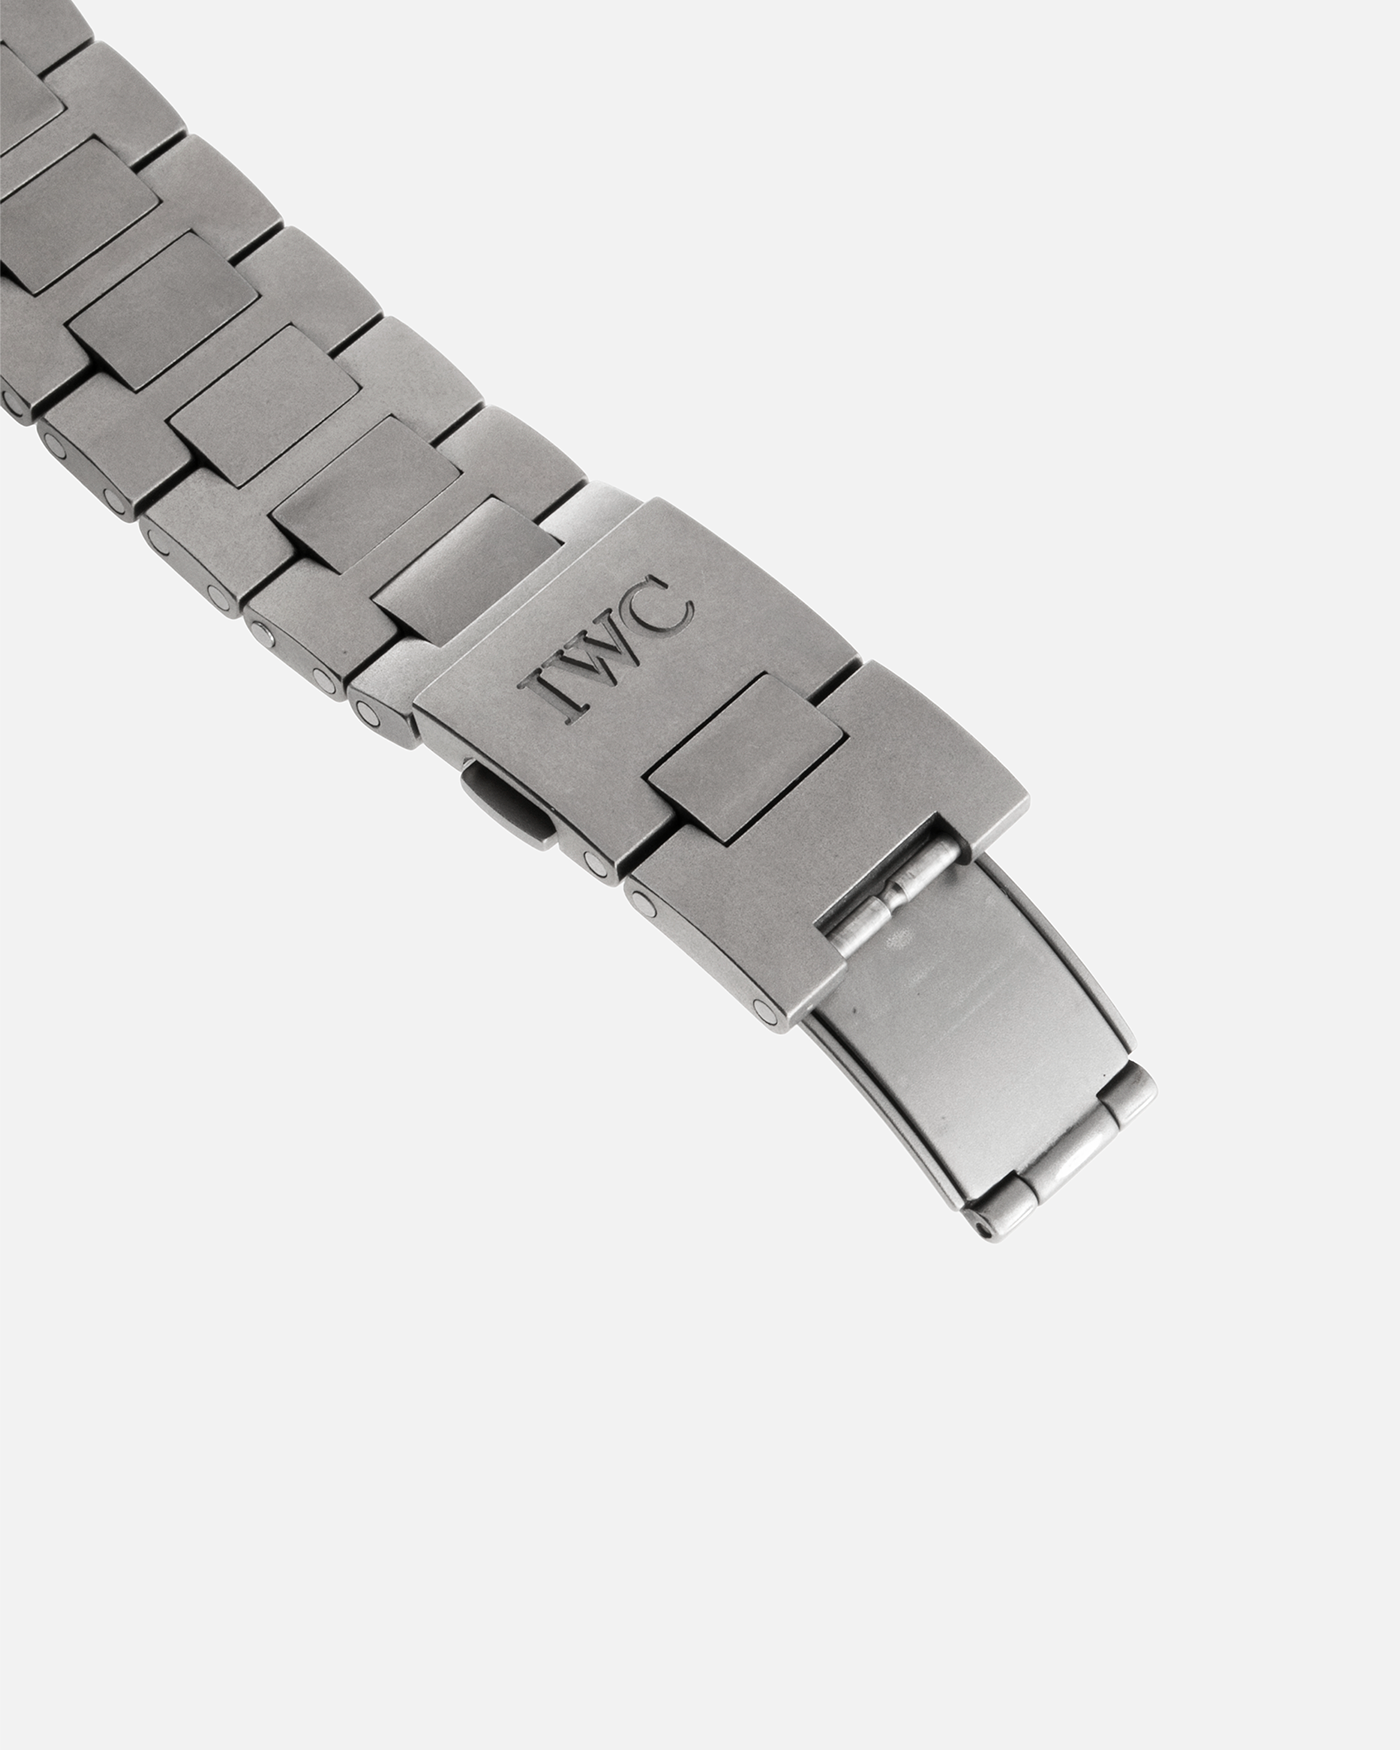 22mm Steel Watch Bracelet Strap Band Fits IWC Aquatimer IW329002 376804  376708 | eBay